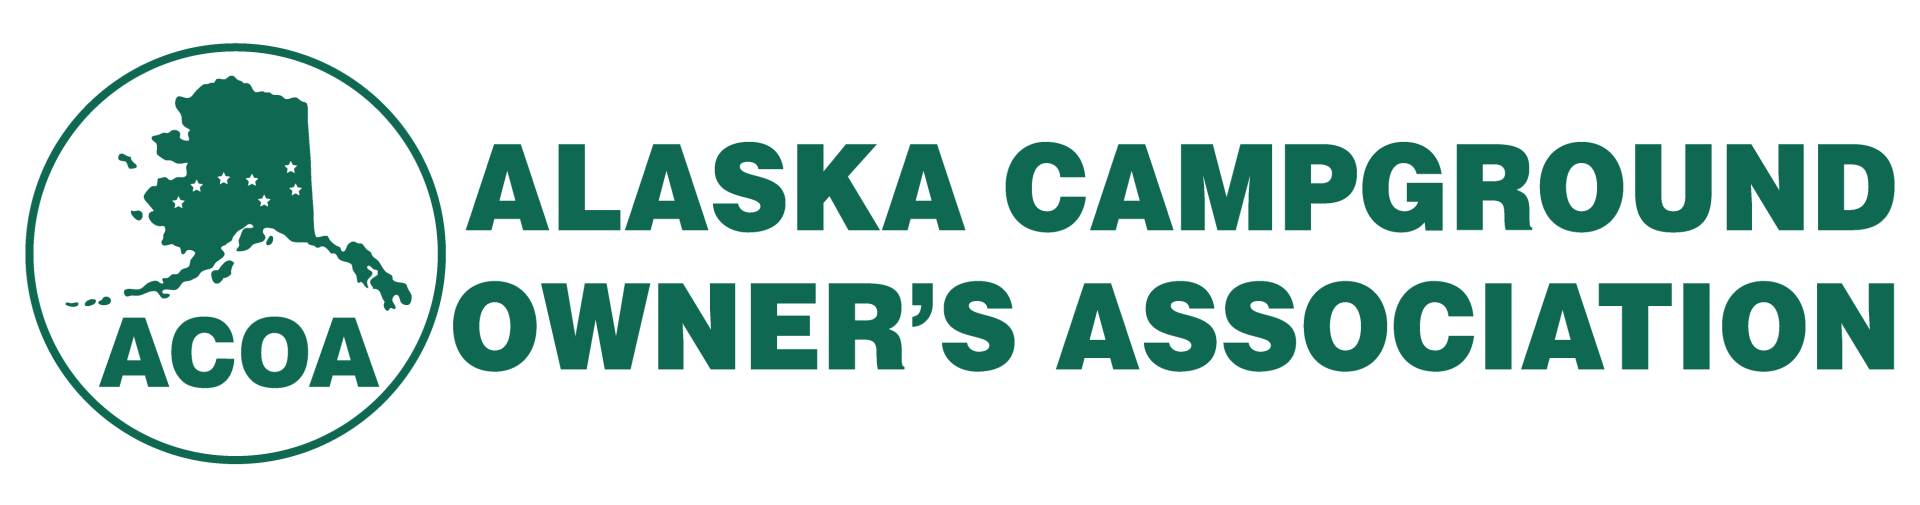 Alaska Campground Owner's Association Logo